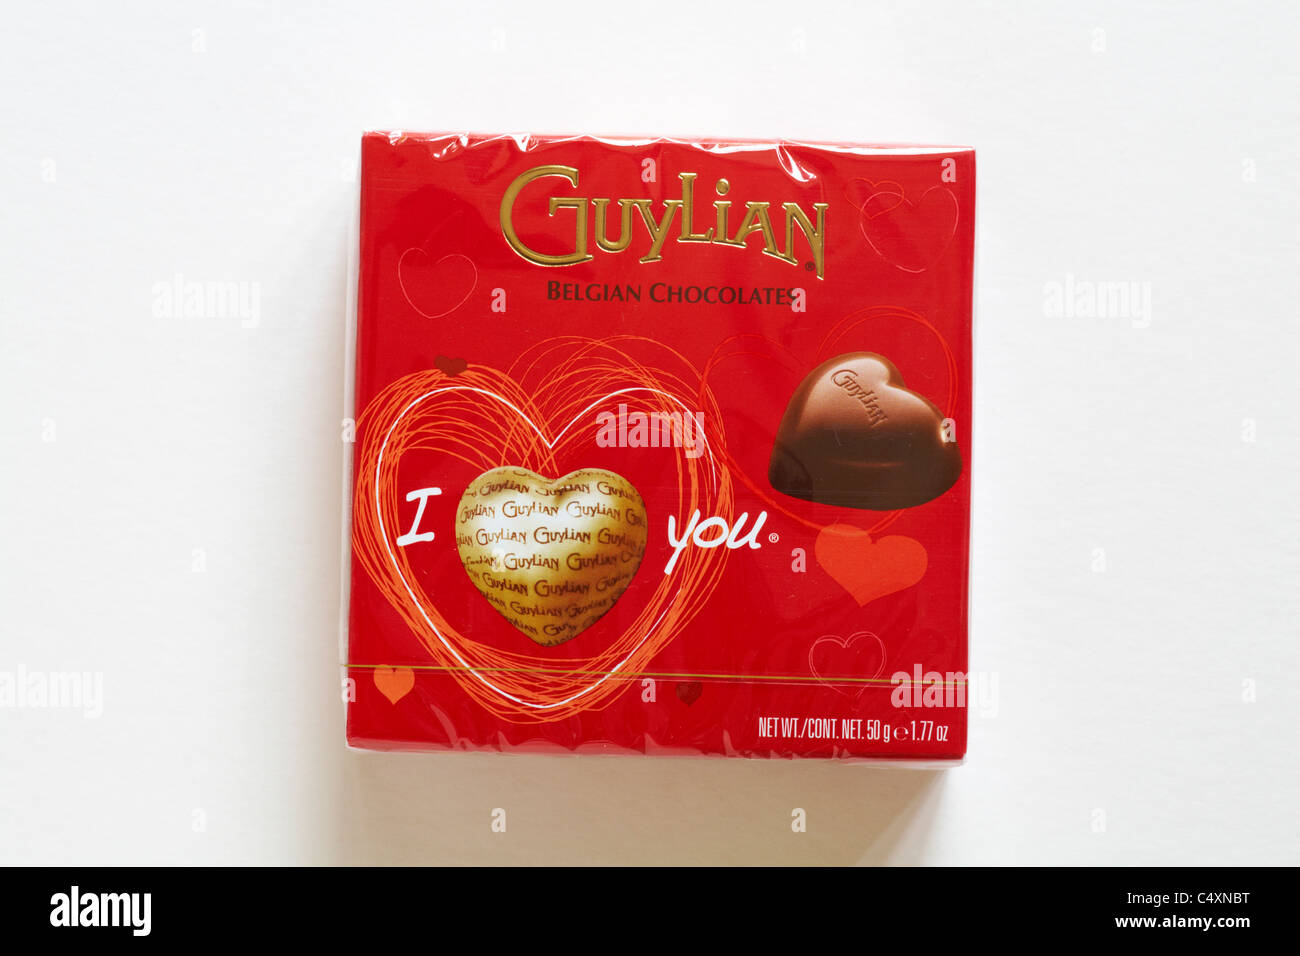 Gros plan de la boîte de chocolat belge Guylian sur un blanc